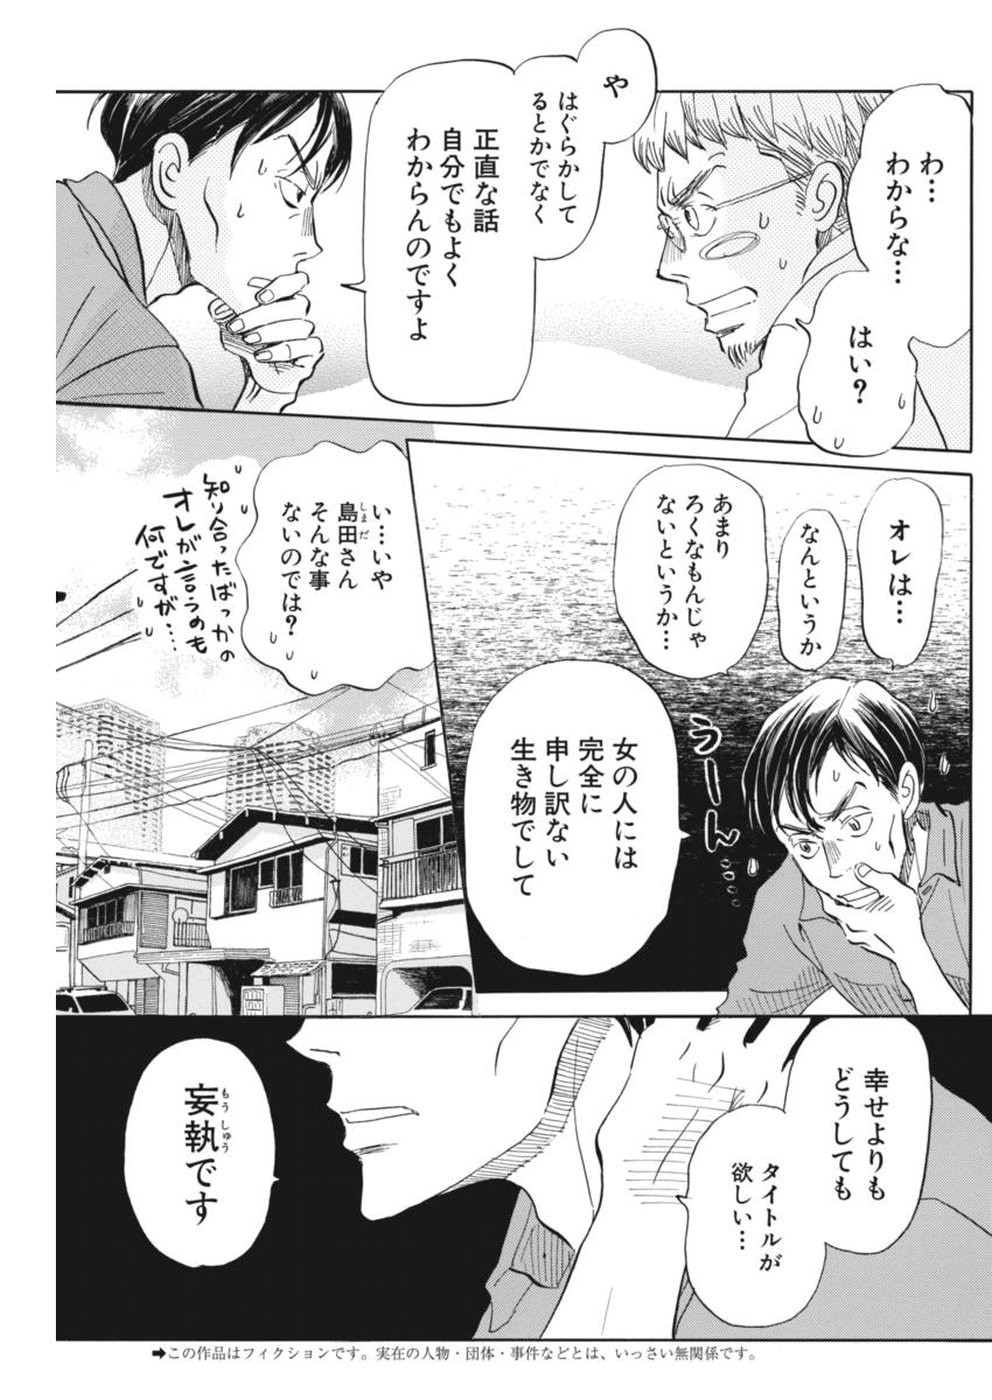 3 Gatsu no Lion - Chapter 145 - Page 3